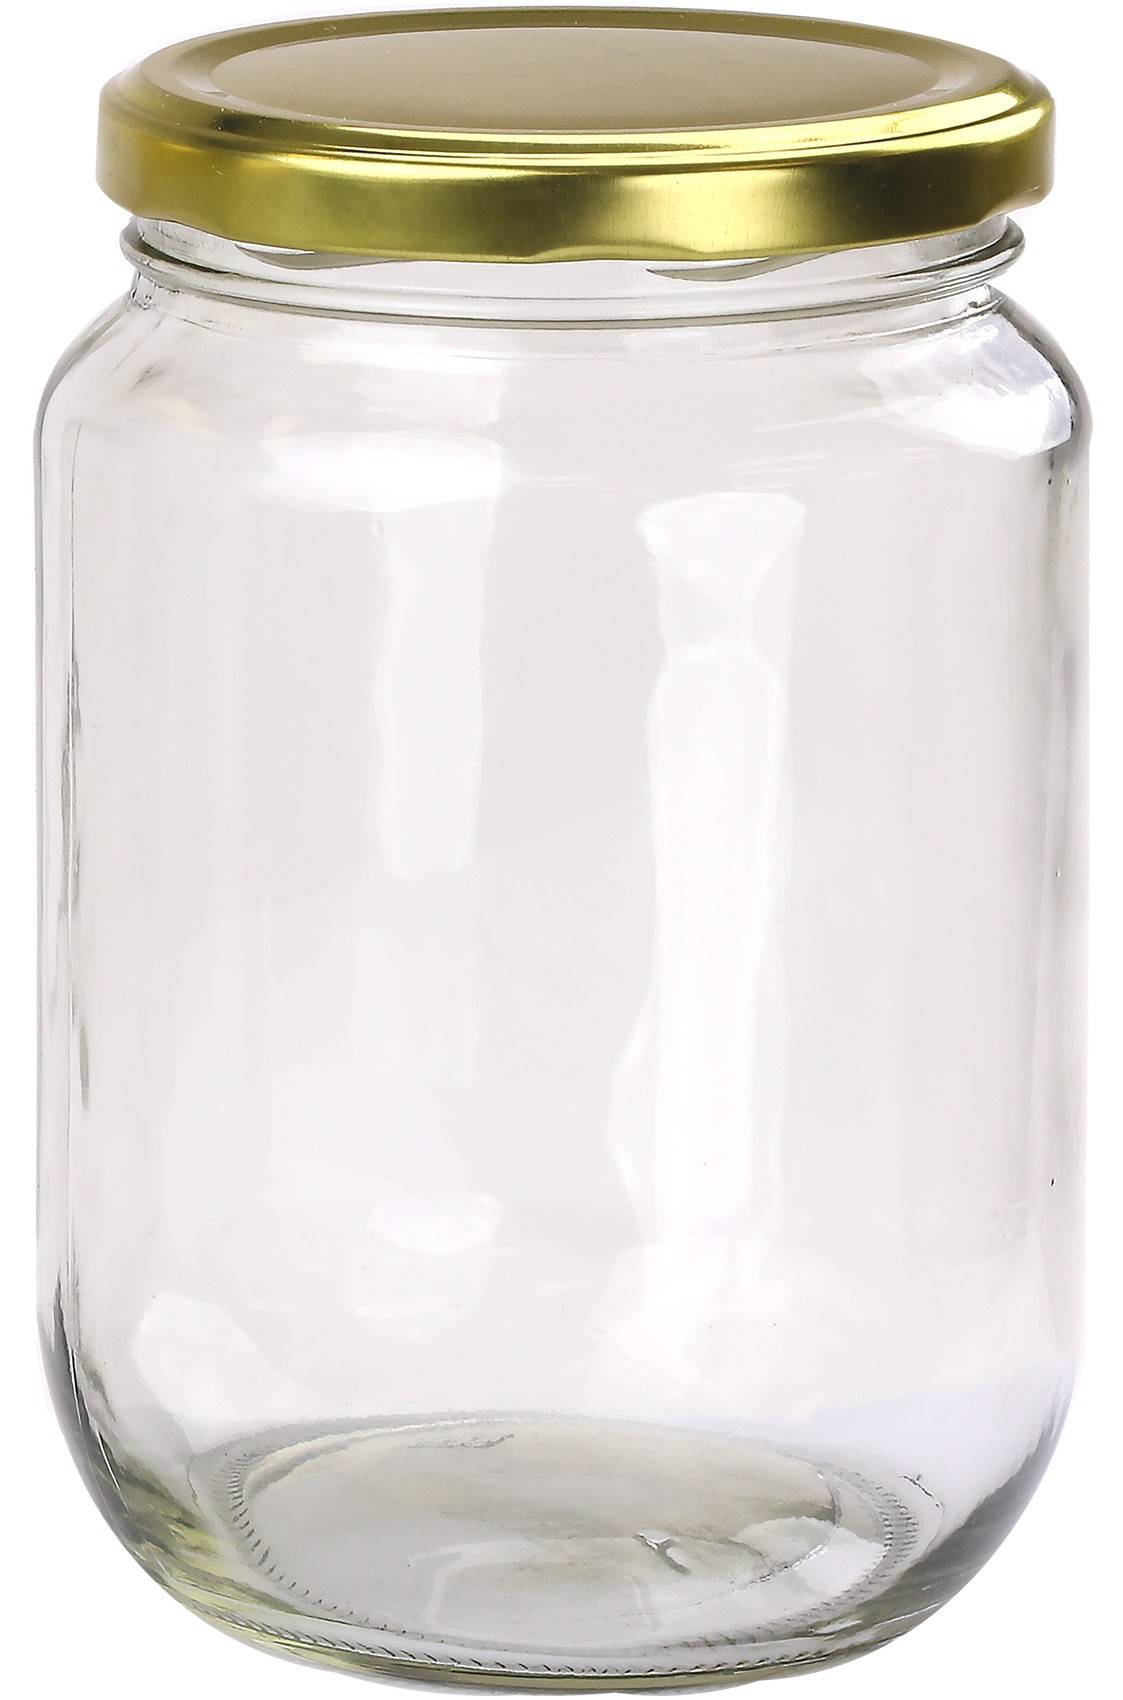 36 pcs Honey Jars - 1kg size - Round Glass Jar with Gold Lid